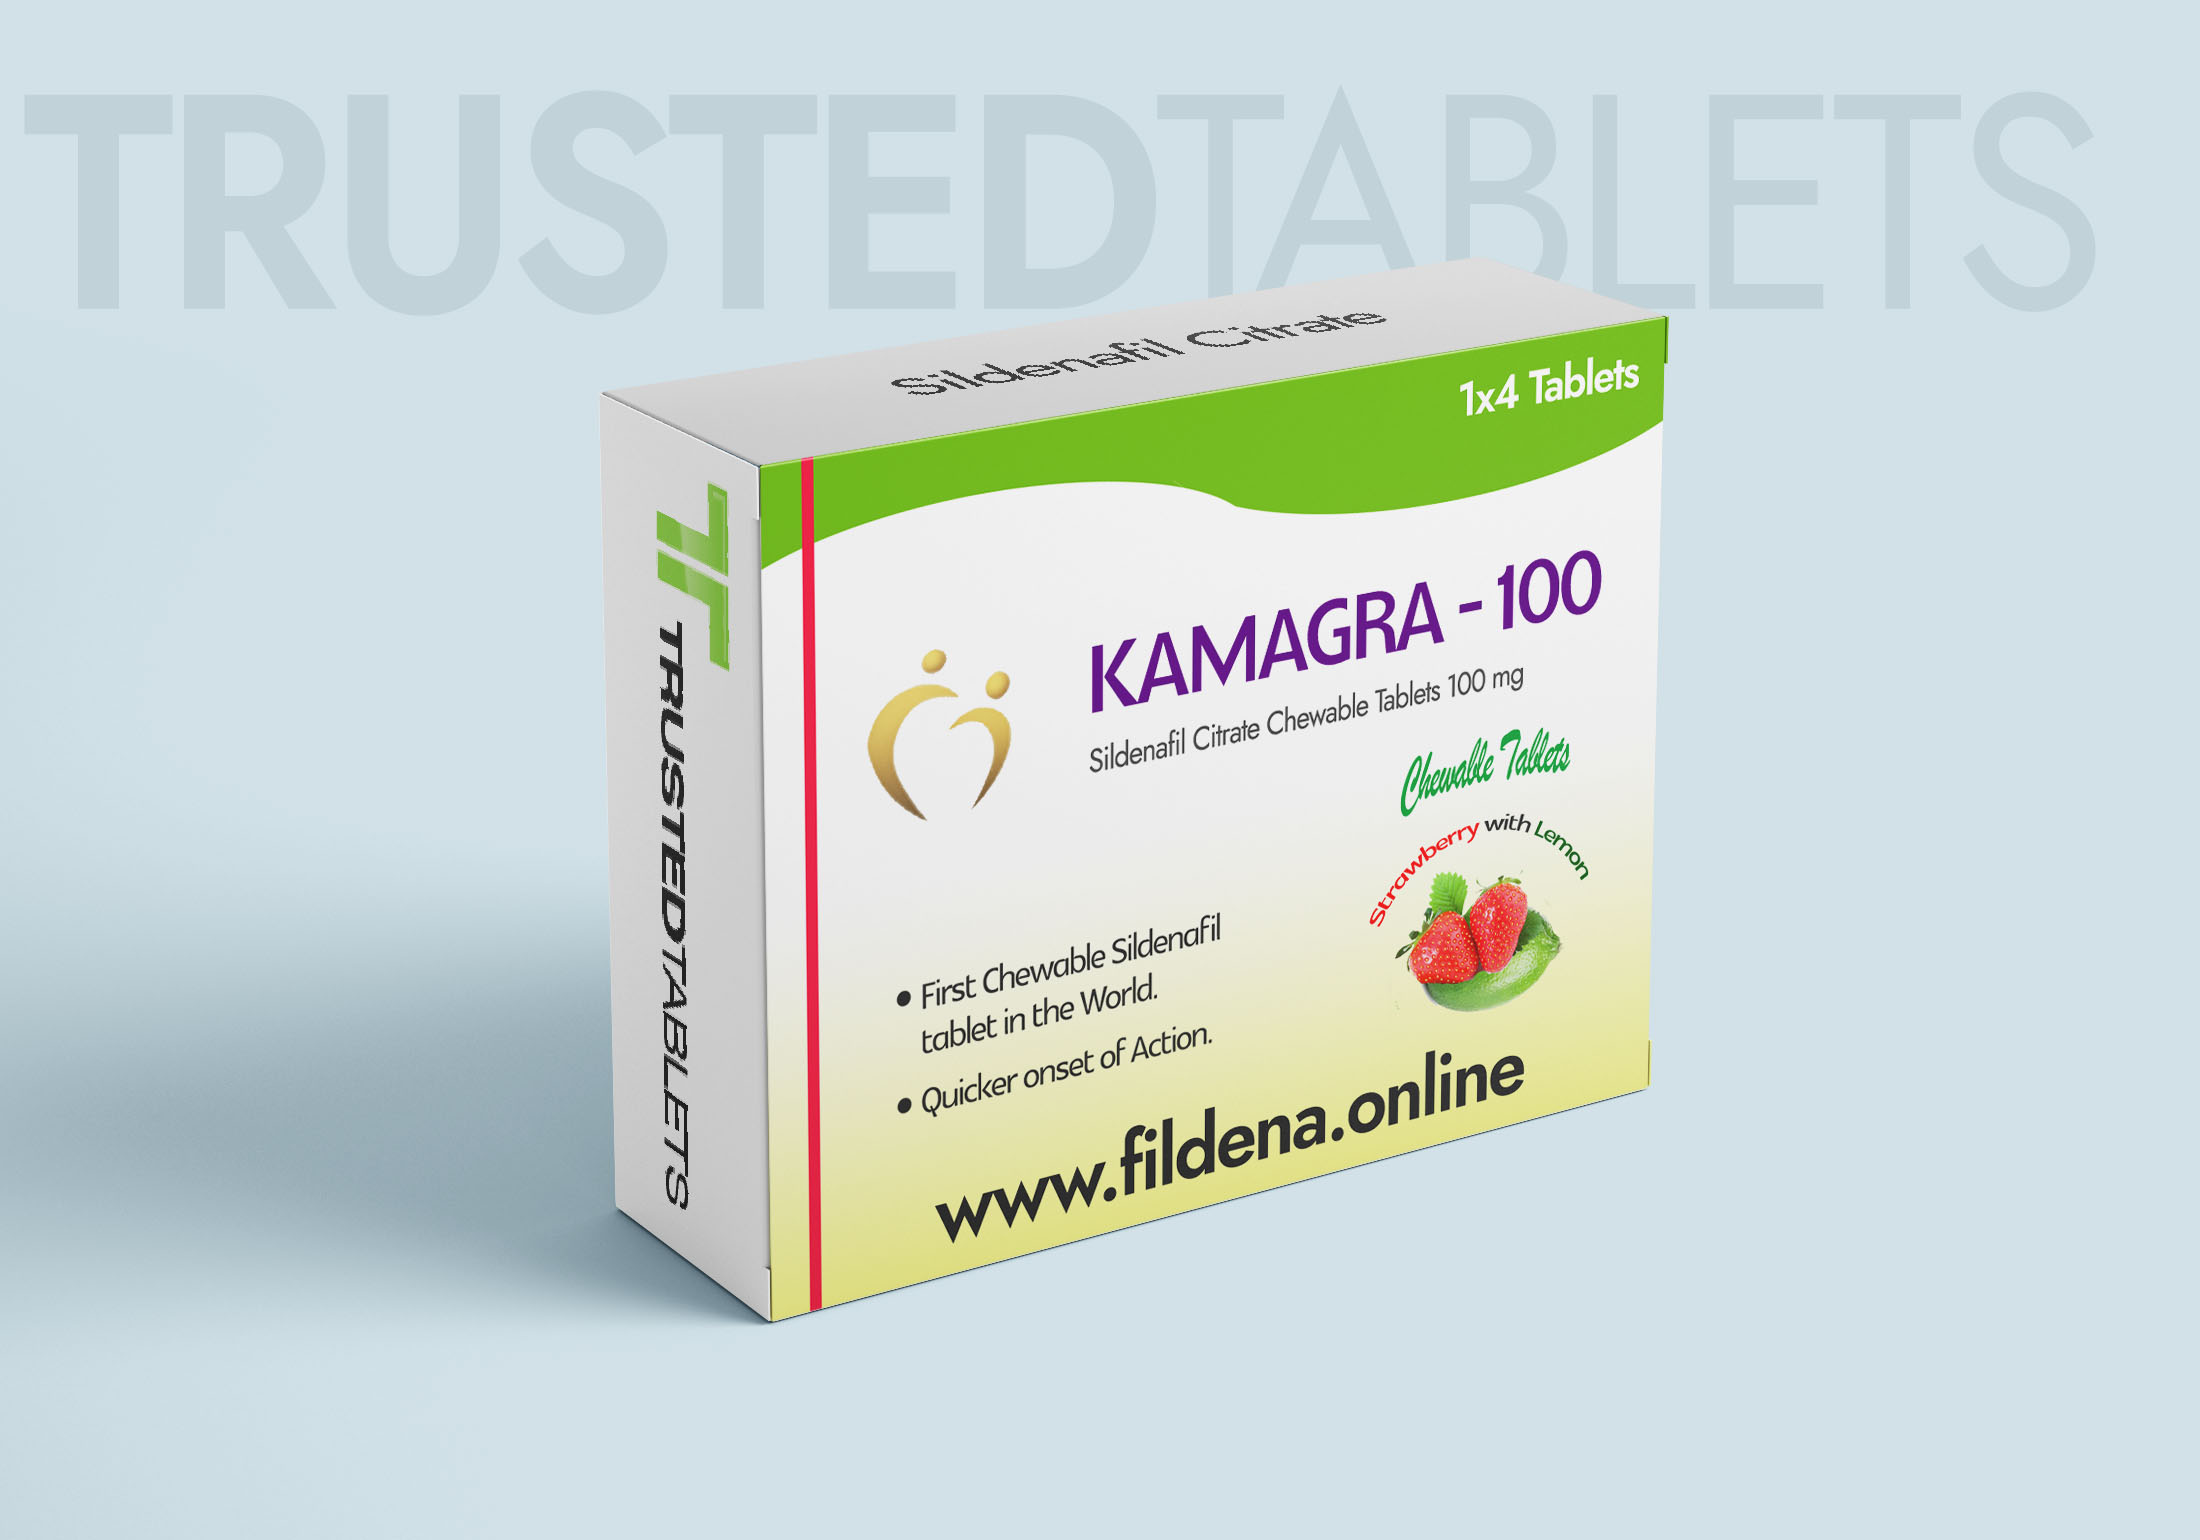 Kamagra Polo TrustedTablets